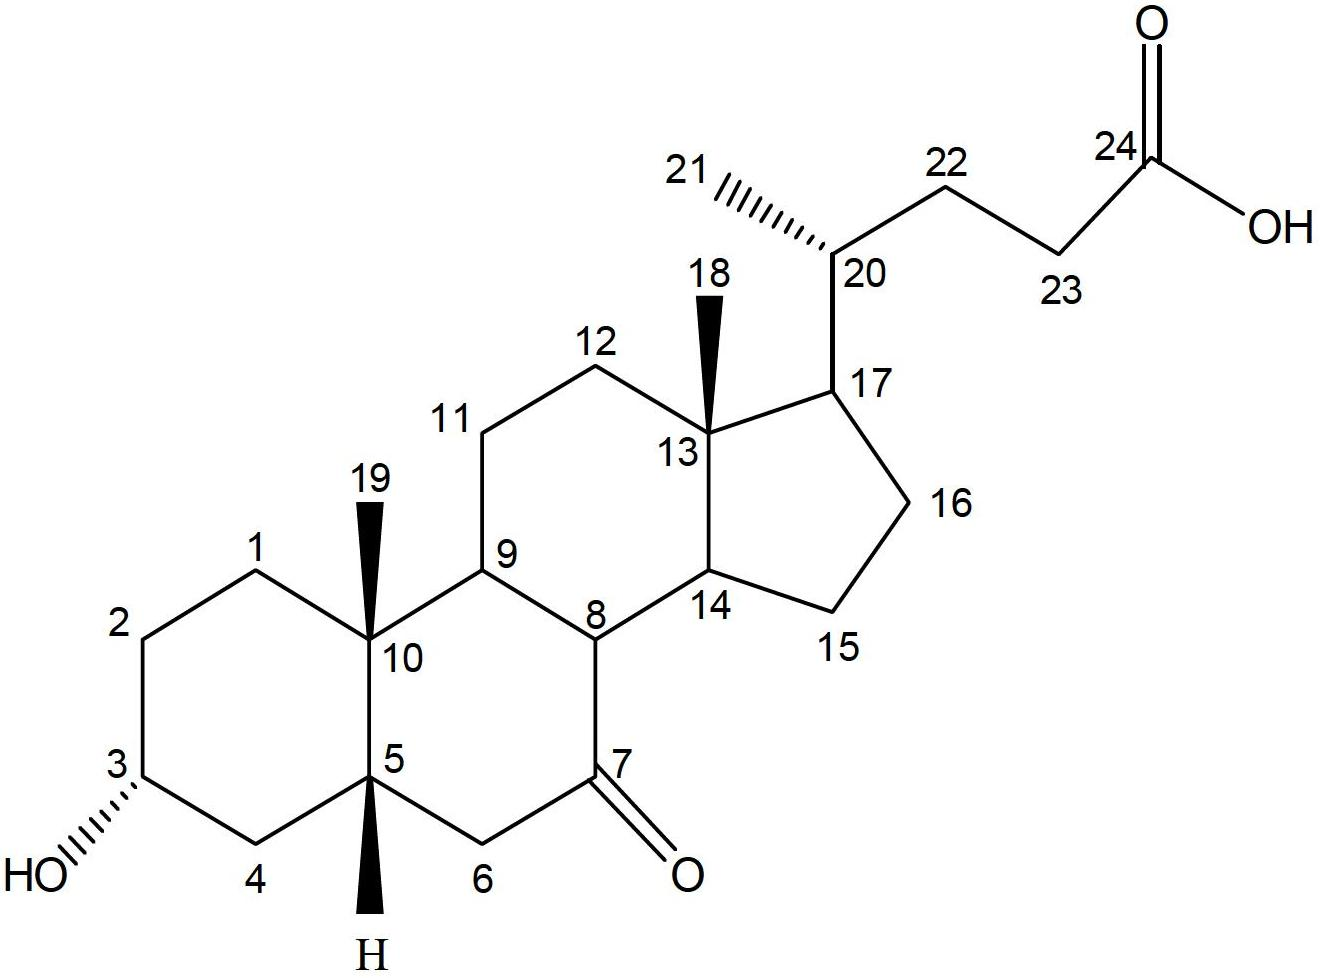 Method for preparing ursodesoxycholic acid by electro-reduction